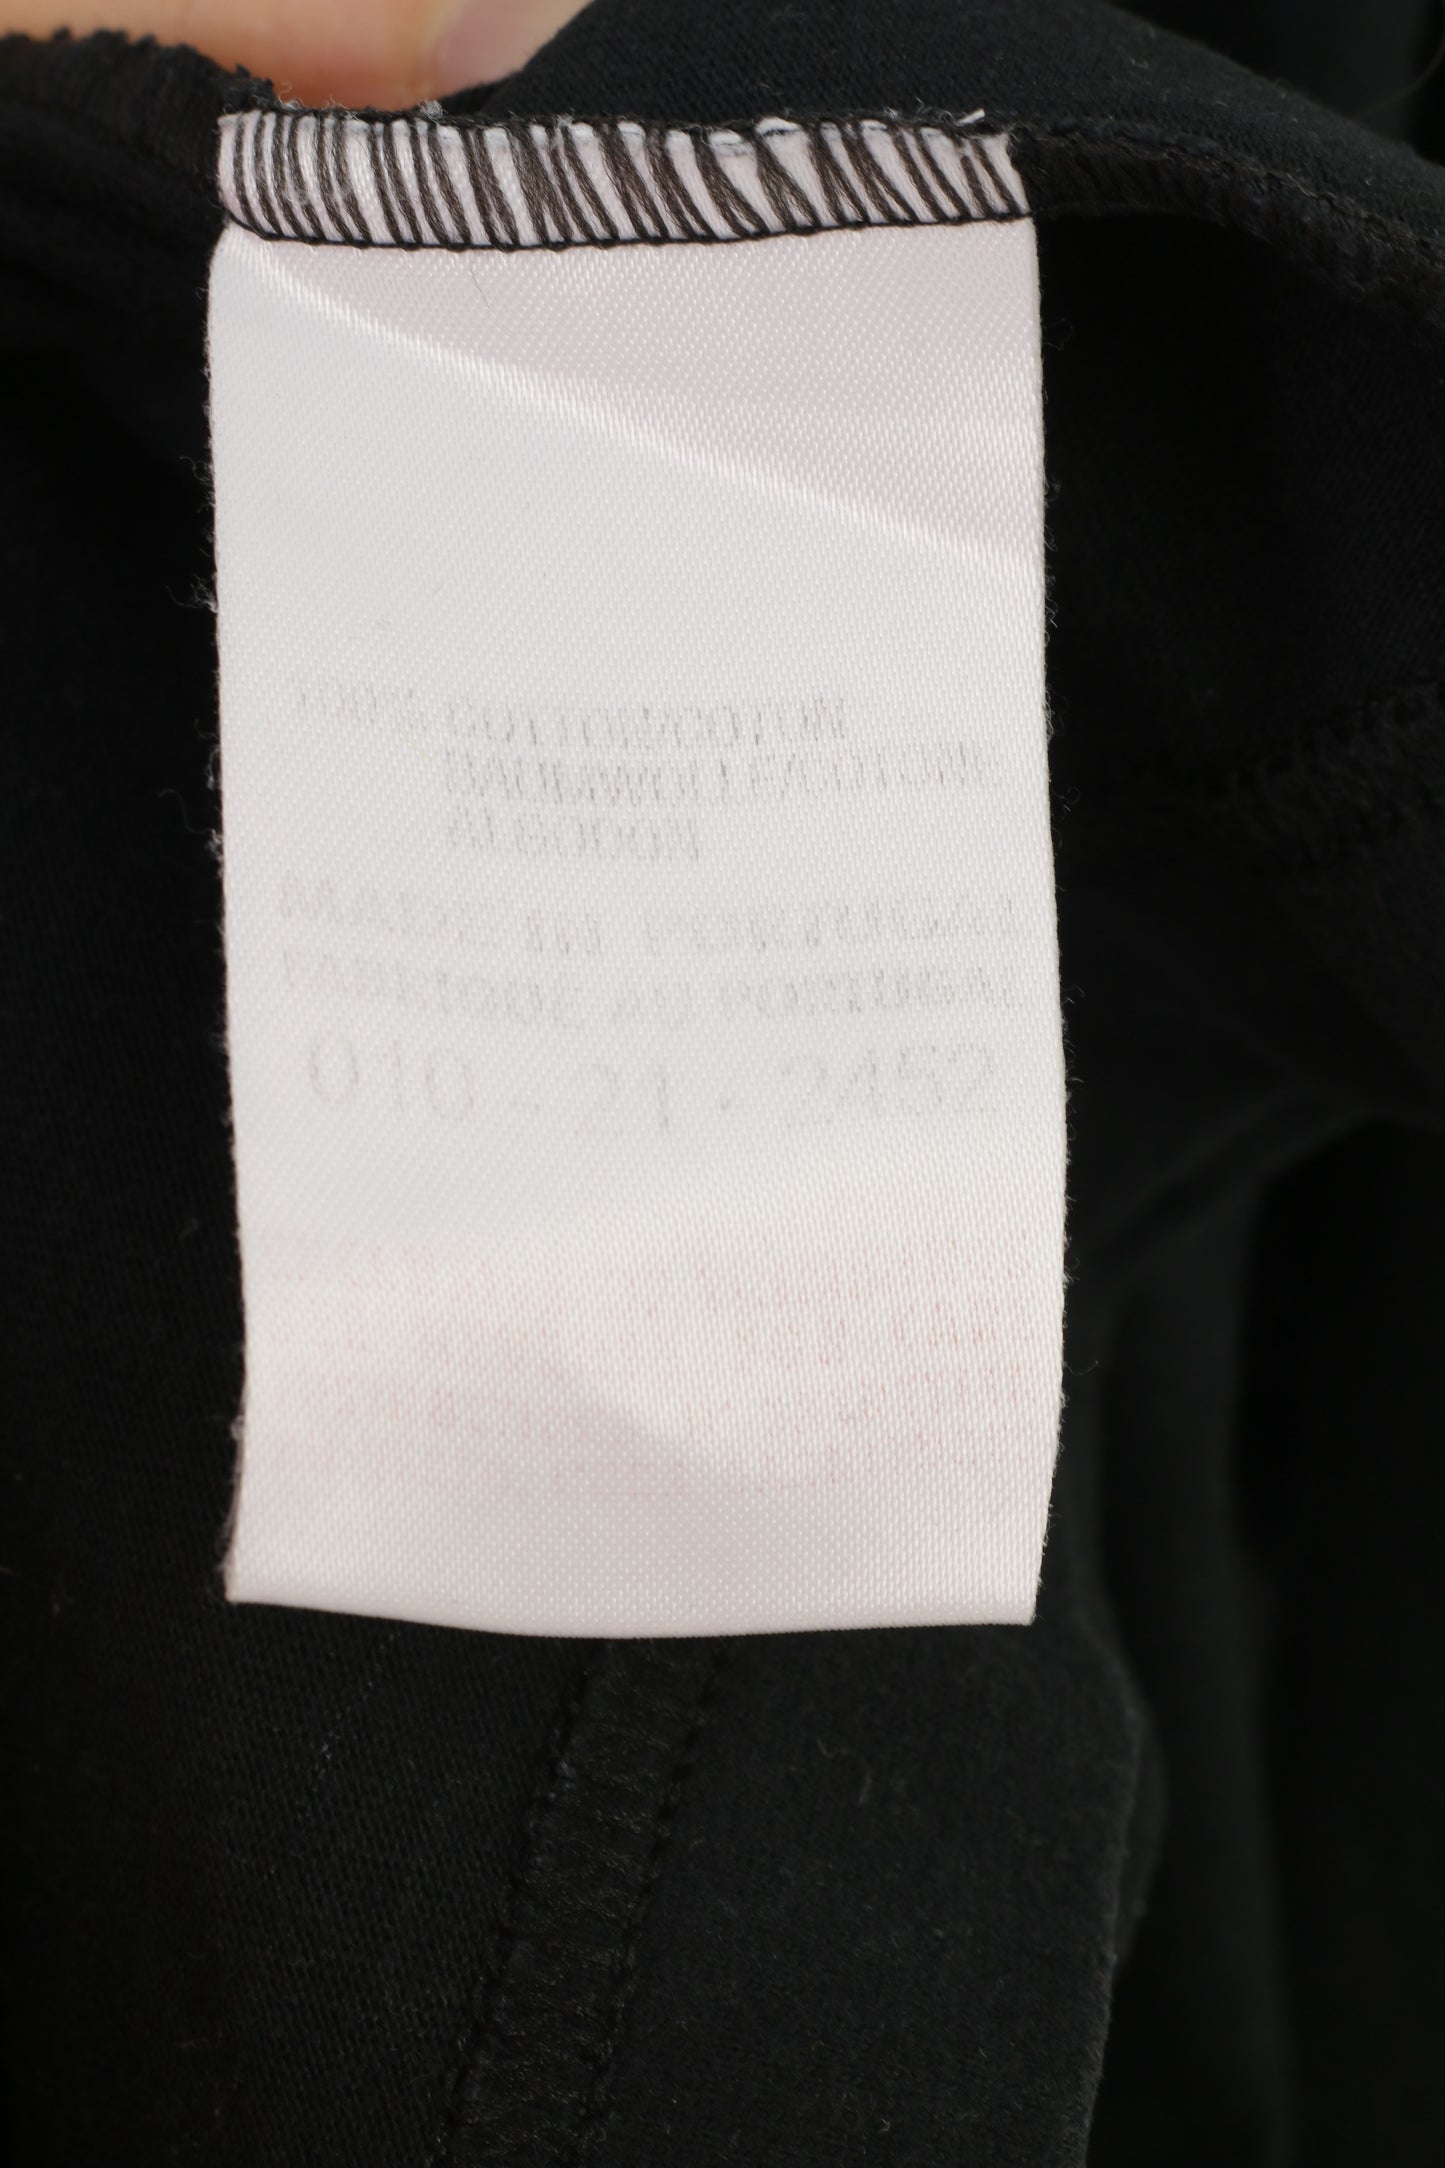 Puma Men XL Shirt Black Vintage Golf Sportswear Longsleeve Cotton Top